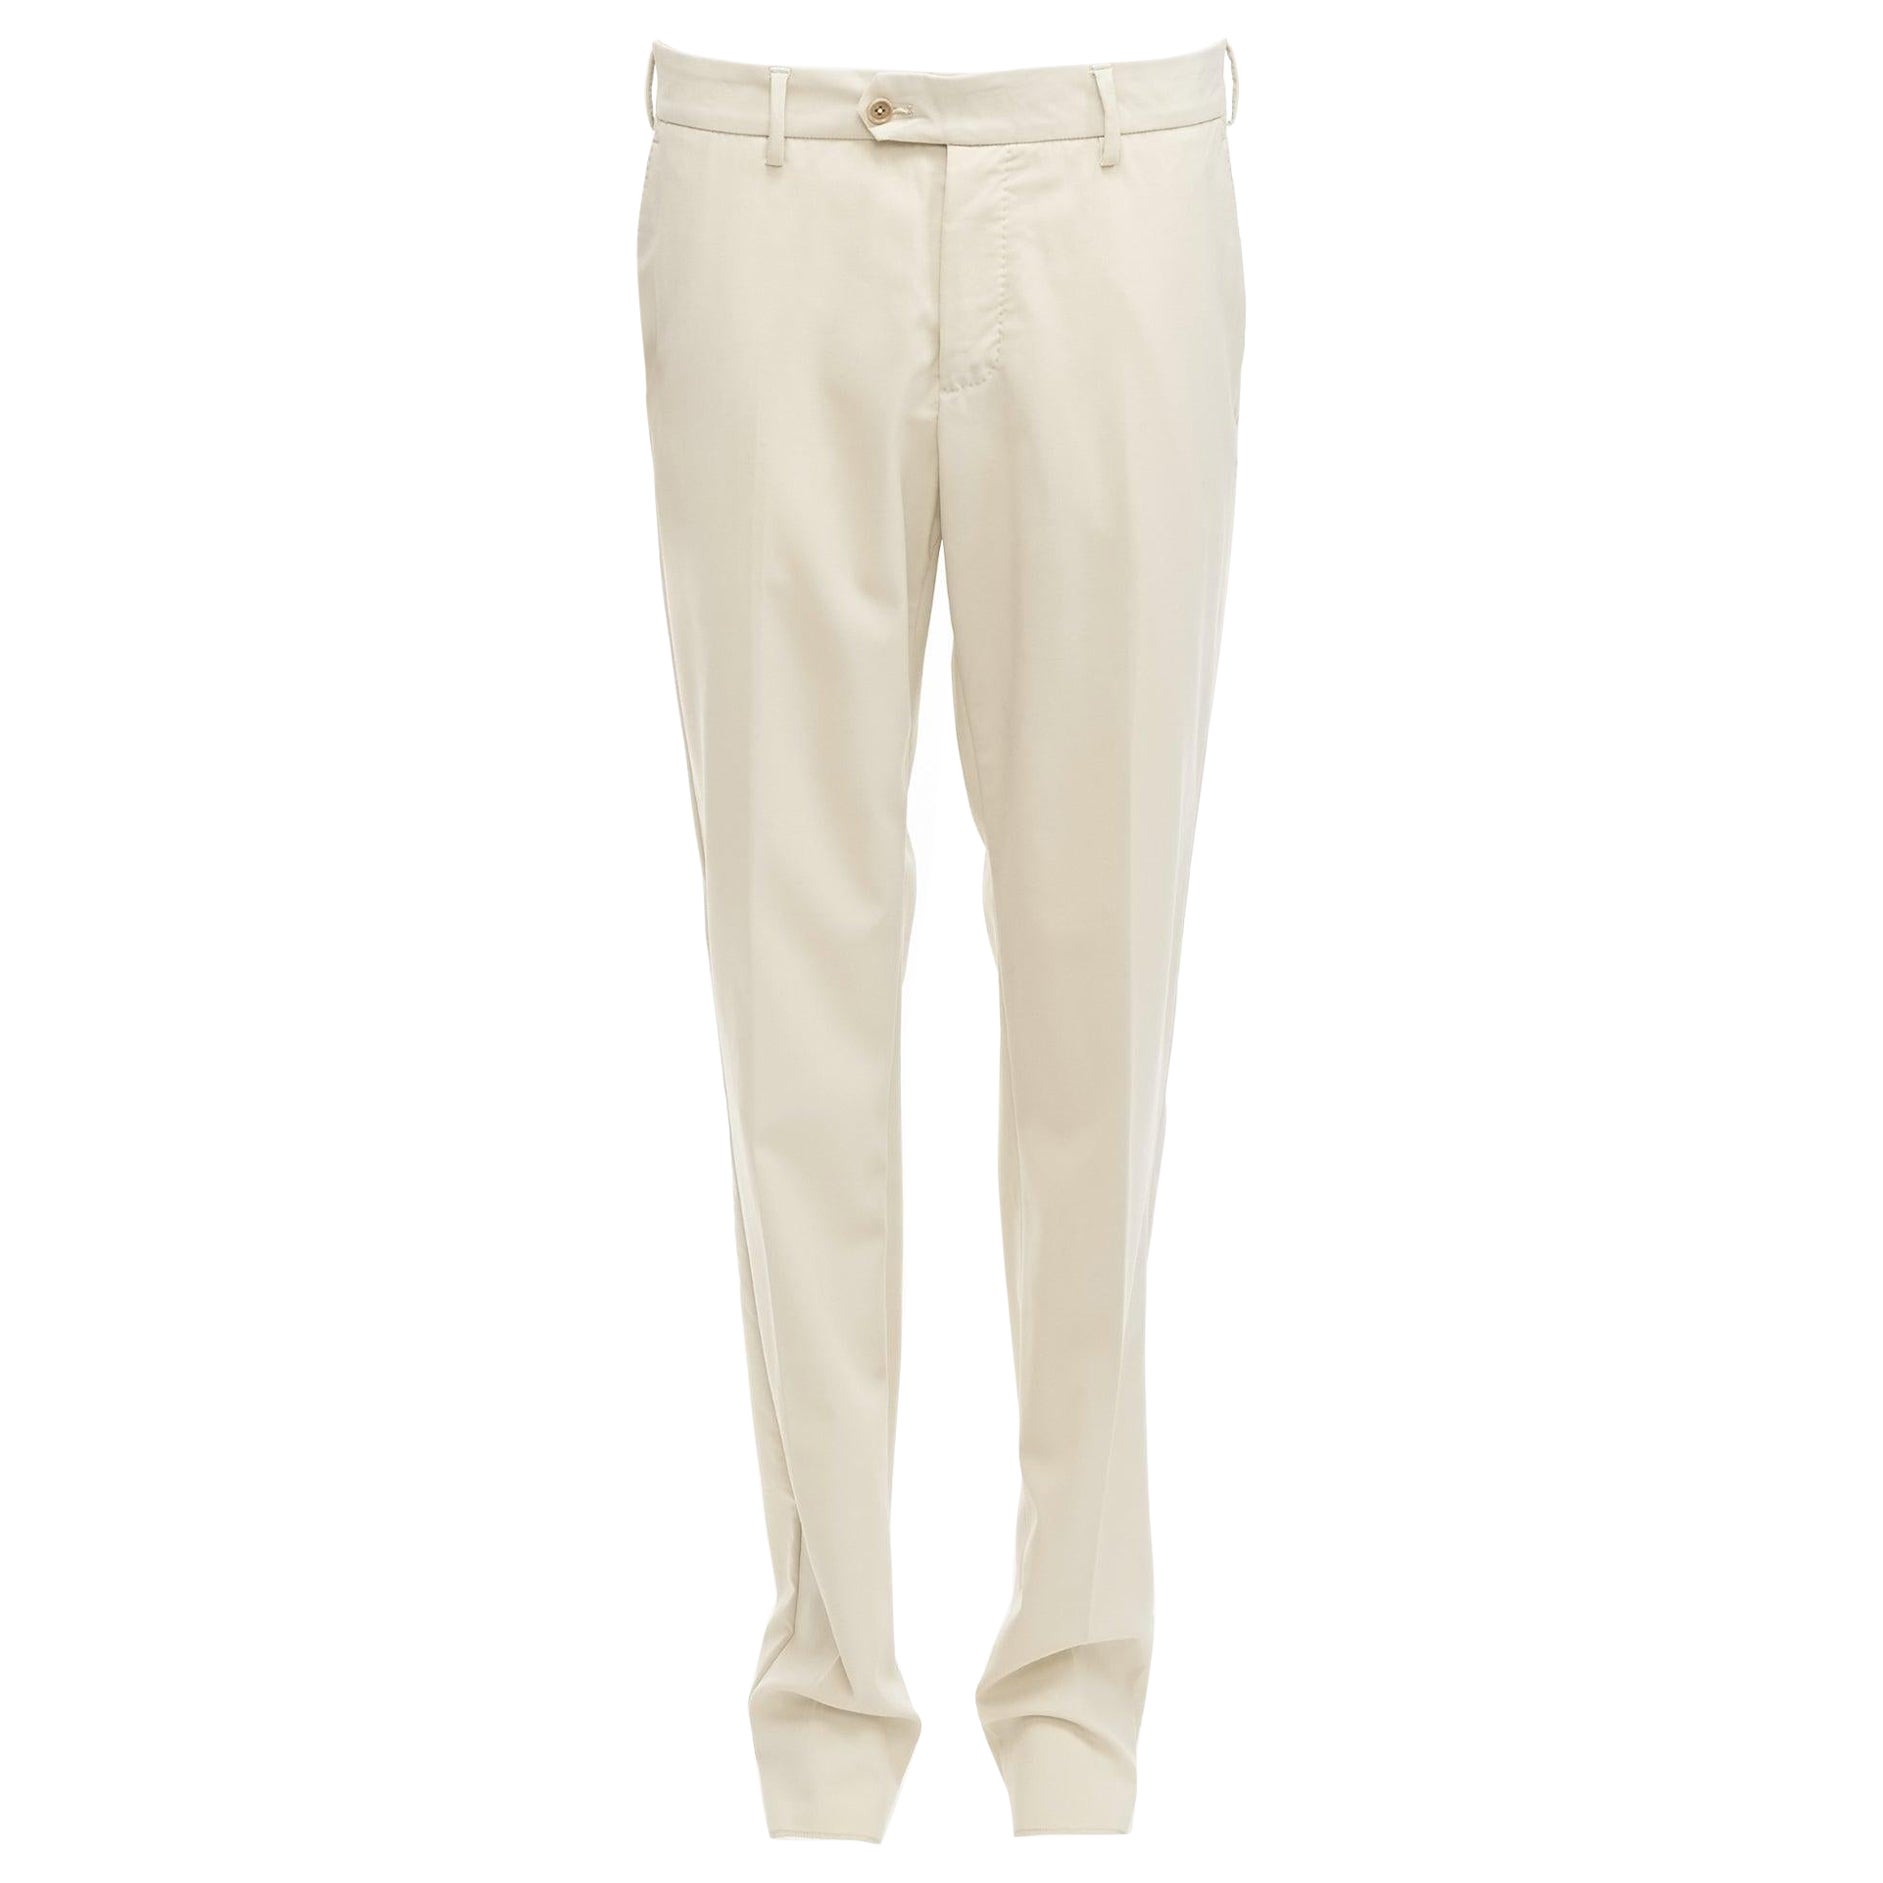 LA PERLA light beige virgin wool blend straight leg minimal classic pants M For Sale